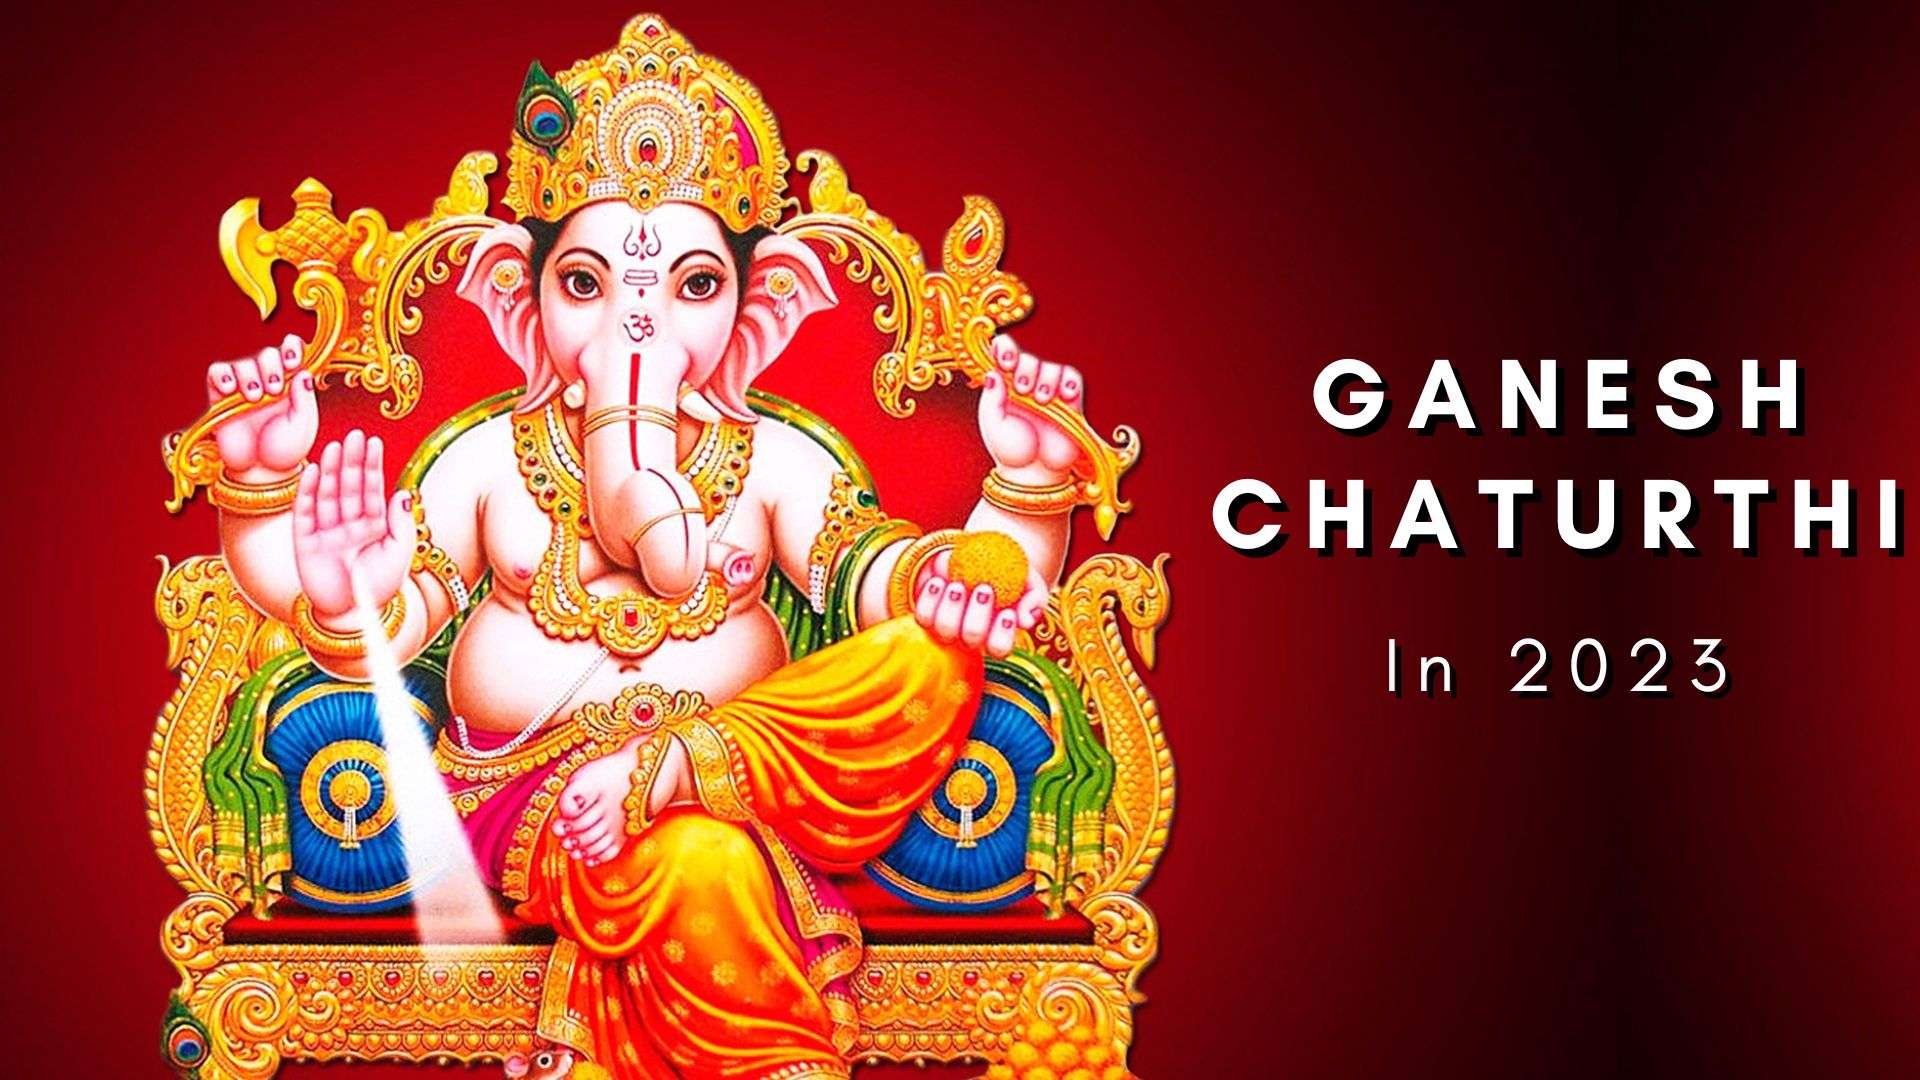 Ganesh Chaturthi 2023 Date: Is Ganesh Chaturthi on September 18 or September 19? All About 10-Day Ganesh Chaturthi Festival